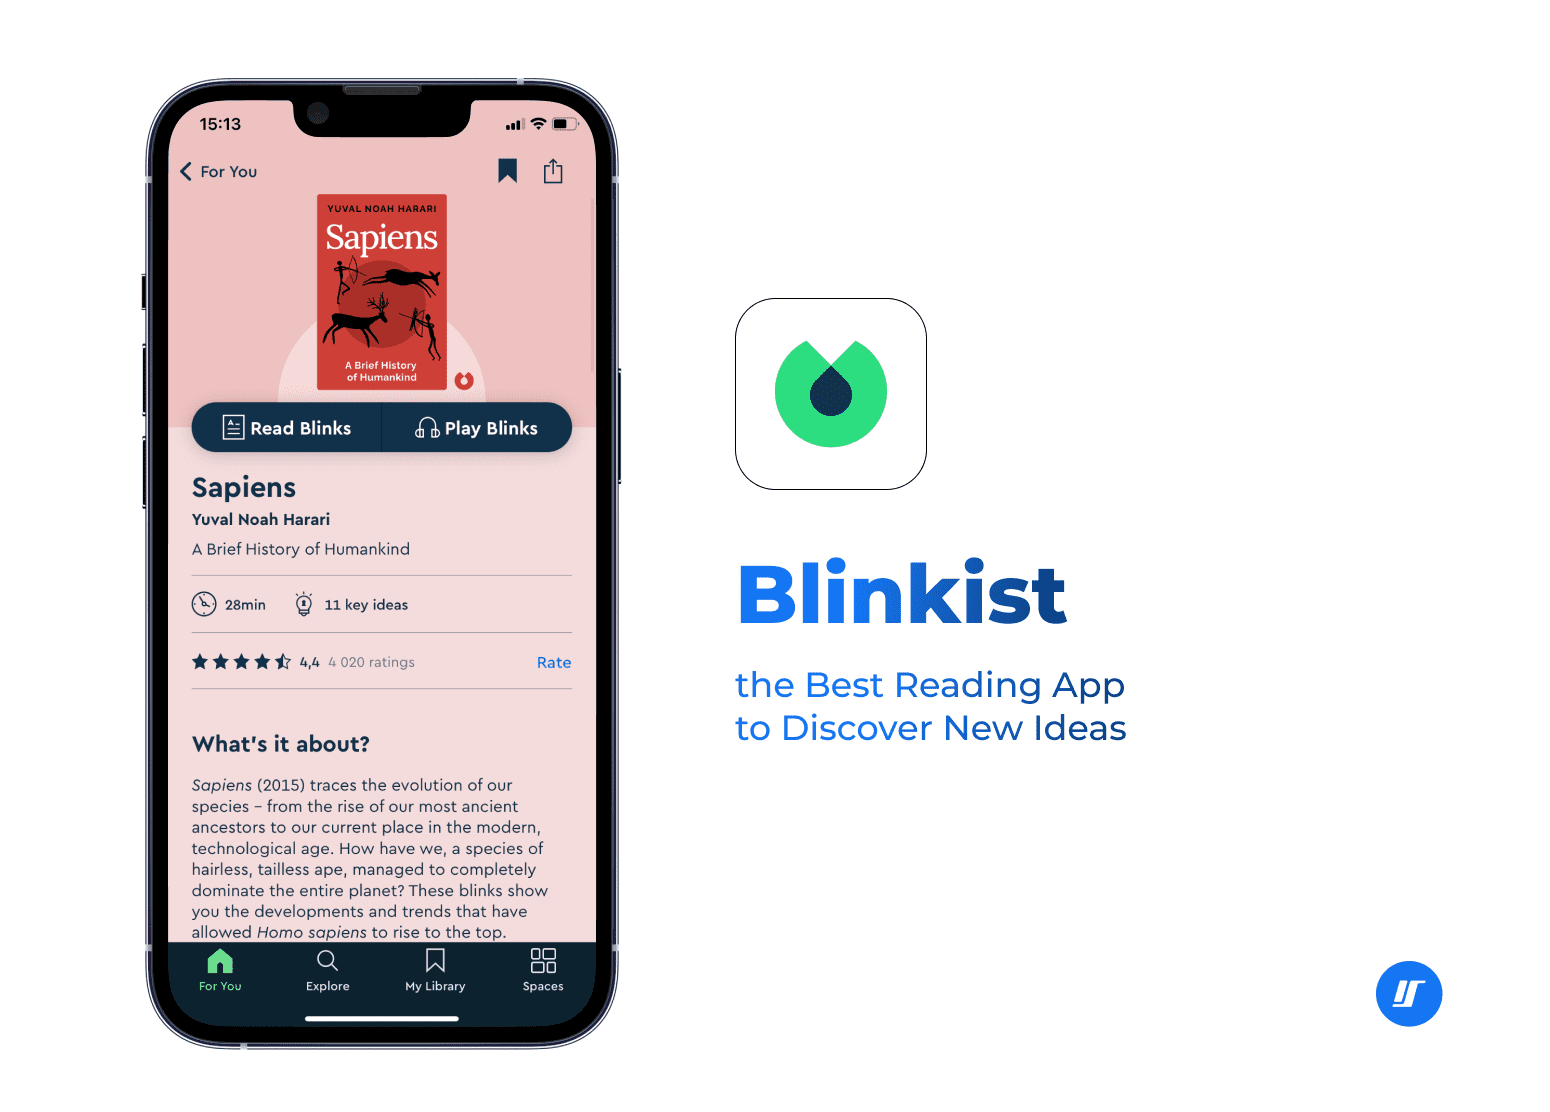 Blinkist app screenshot on the iPhone screen